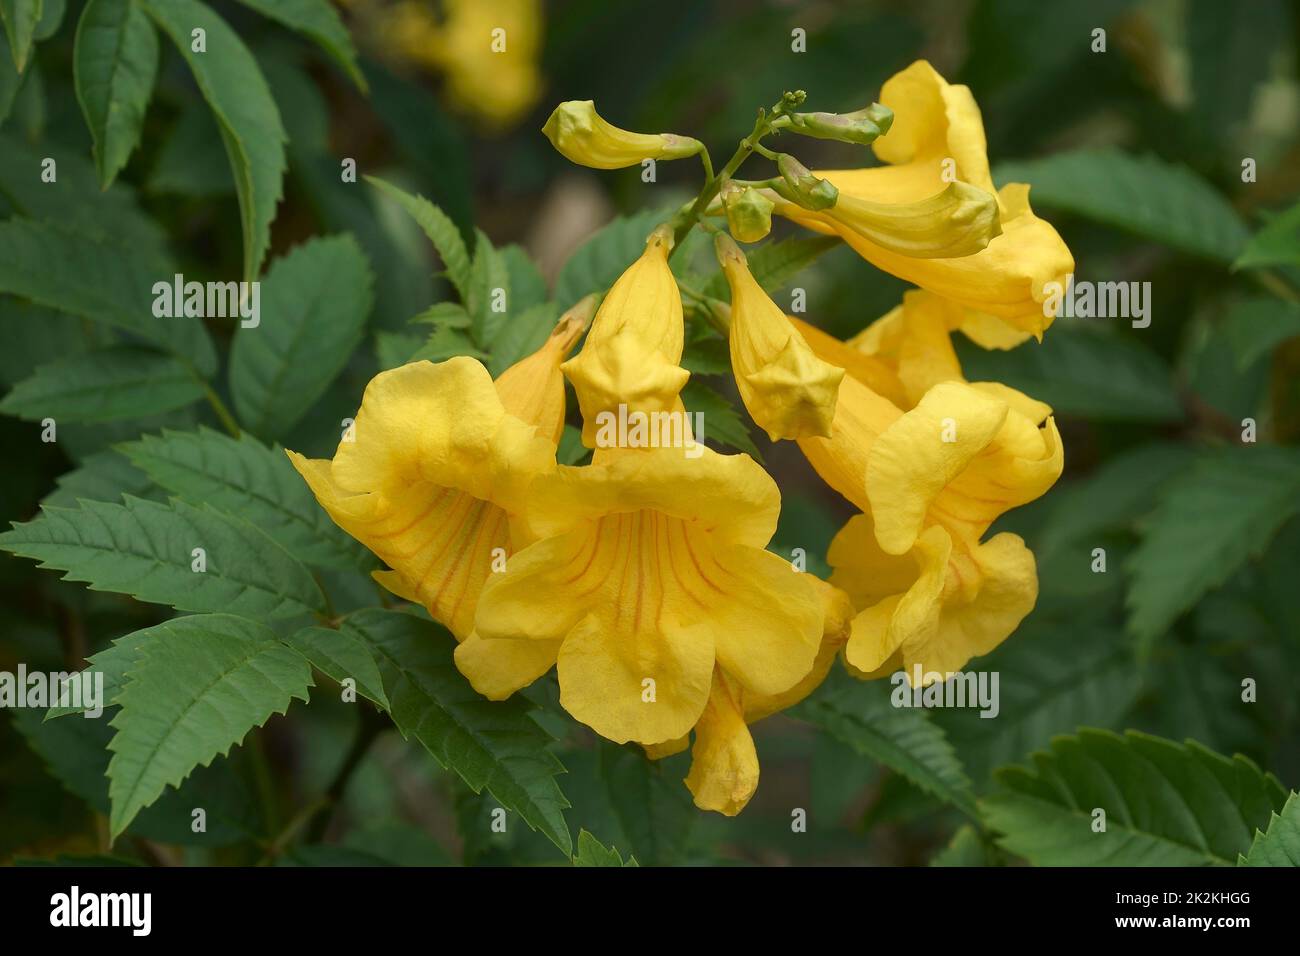 Close-up image of Yellow trumpetbush flowers Stock Photo